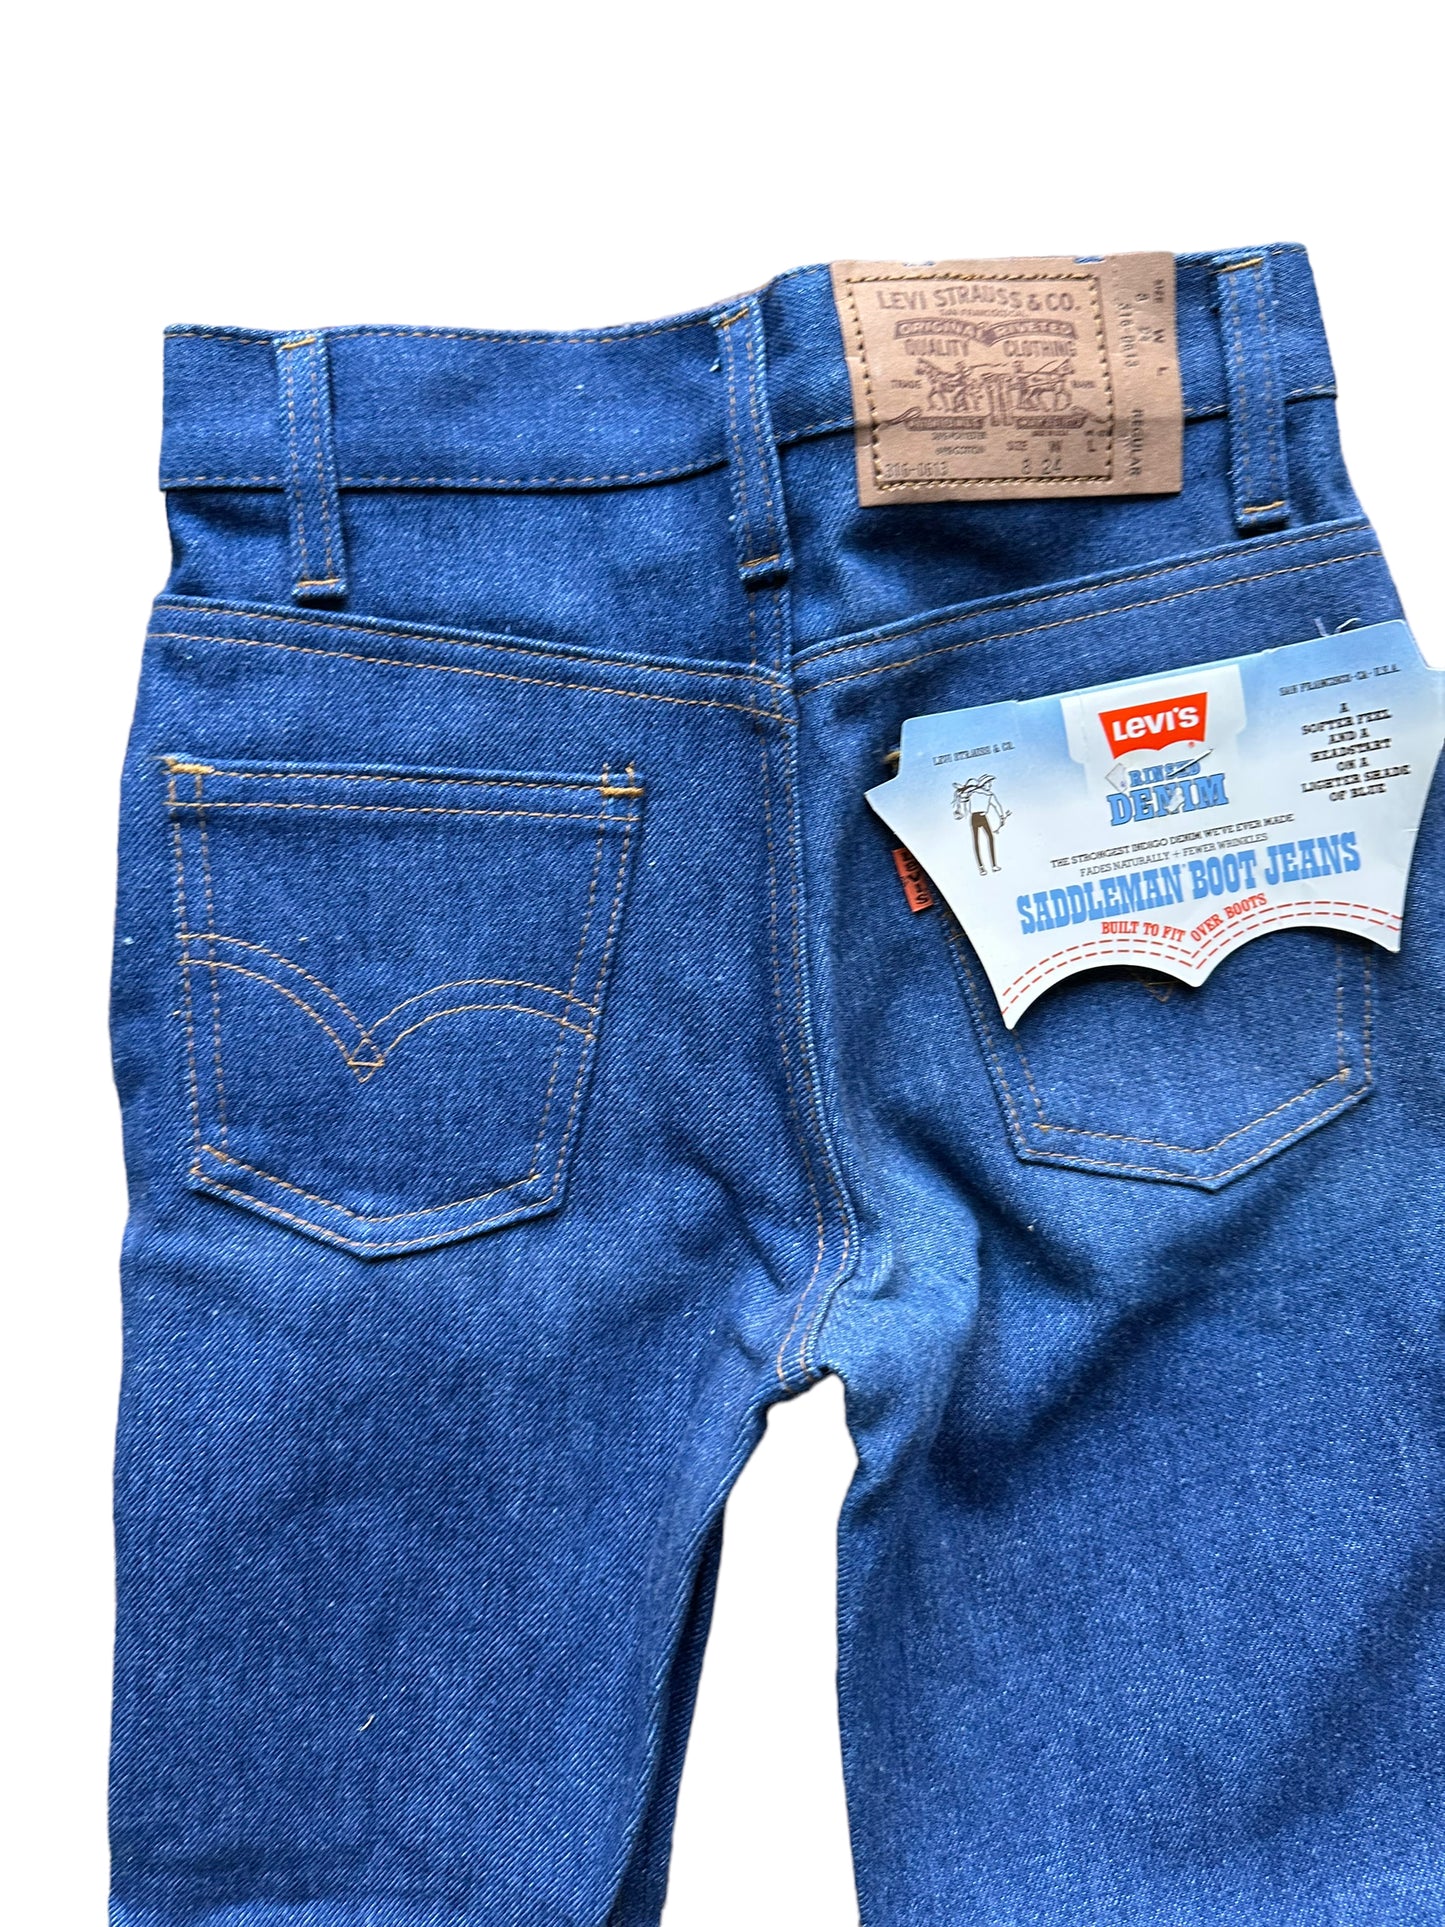 Back pockets view of Vintage Deadstock Saddleman Boot Cut Jeans 24x23 | Seattle Kid's Vintage | Barn Owl Deadstock Levi's